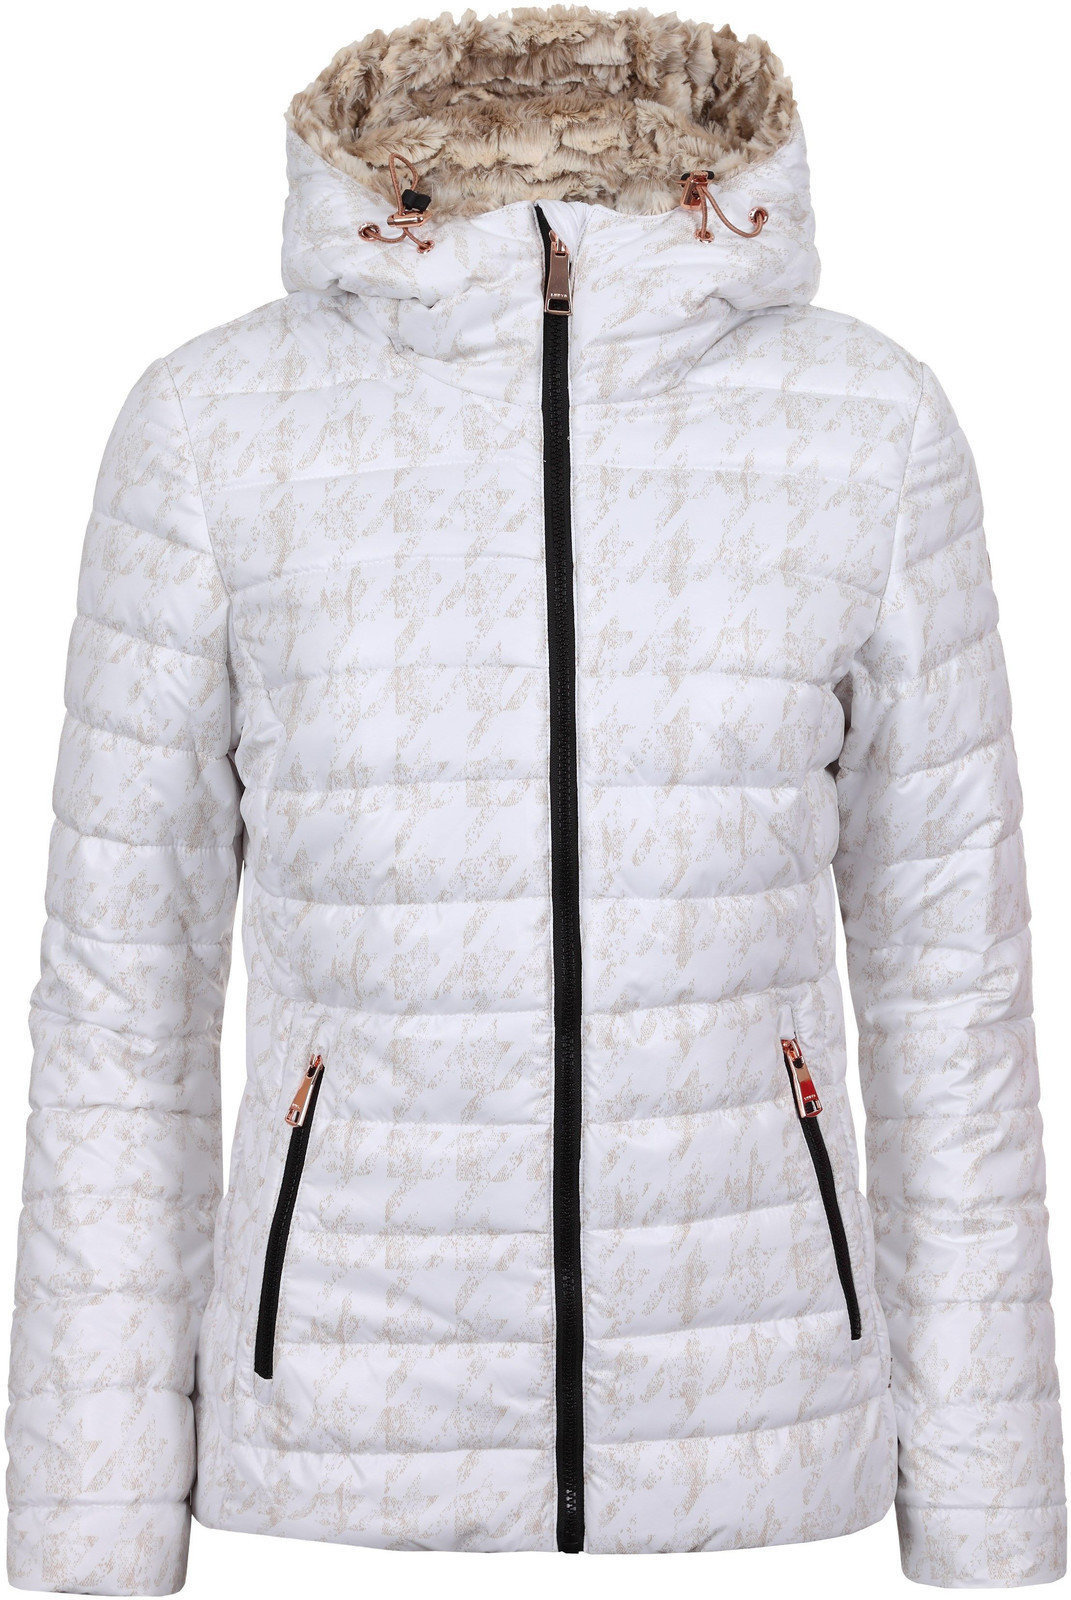 Ski Jacket Luhta Bettina Optic White 36